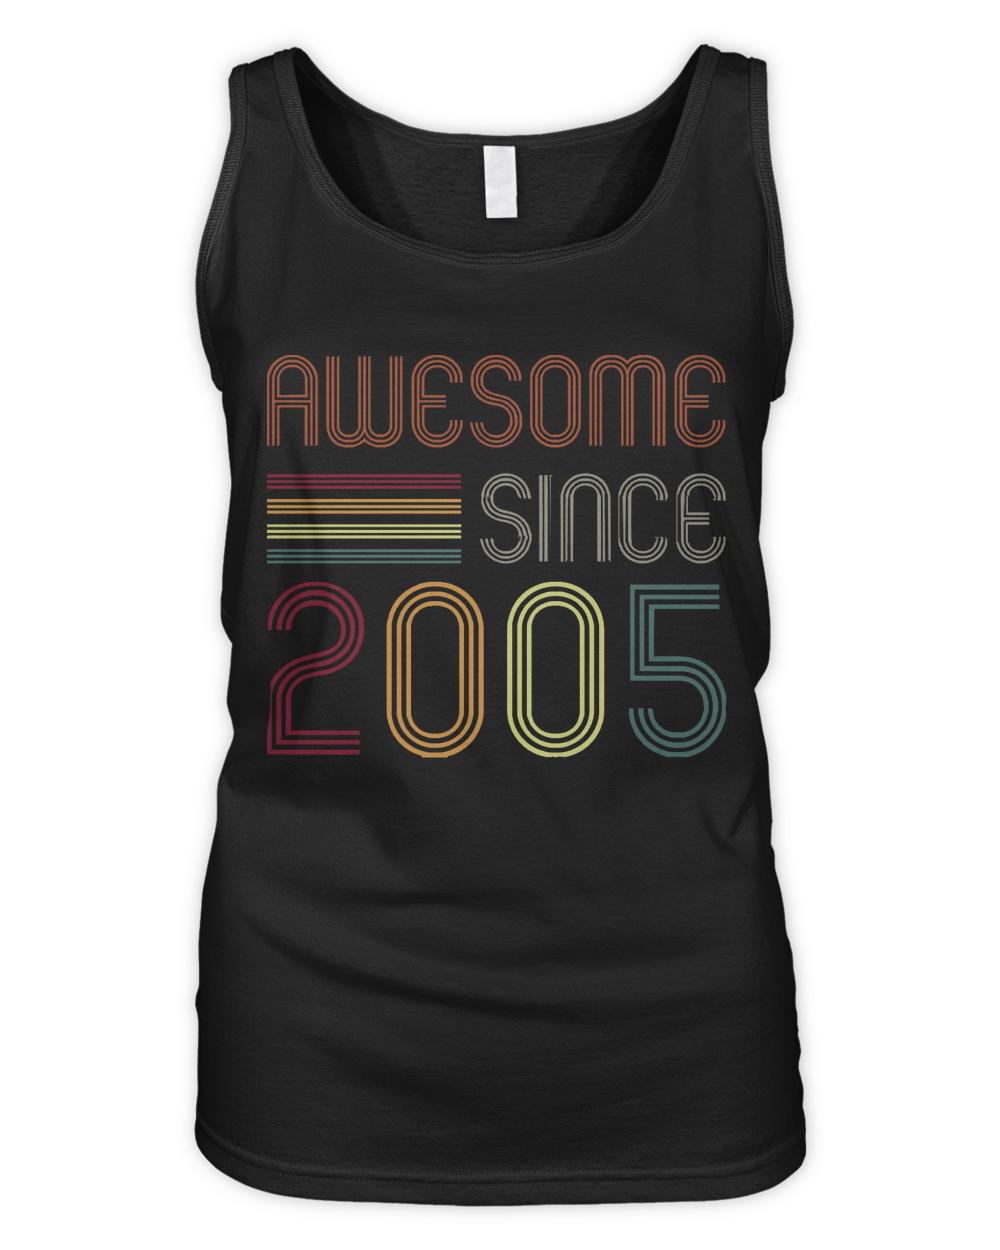 Awesome Since 2005 T-ShirtAwesome Since 2005 18th Birthday Retro T-Shirt